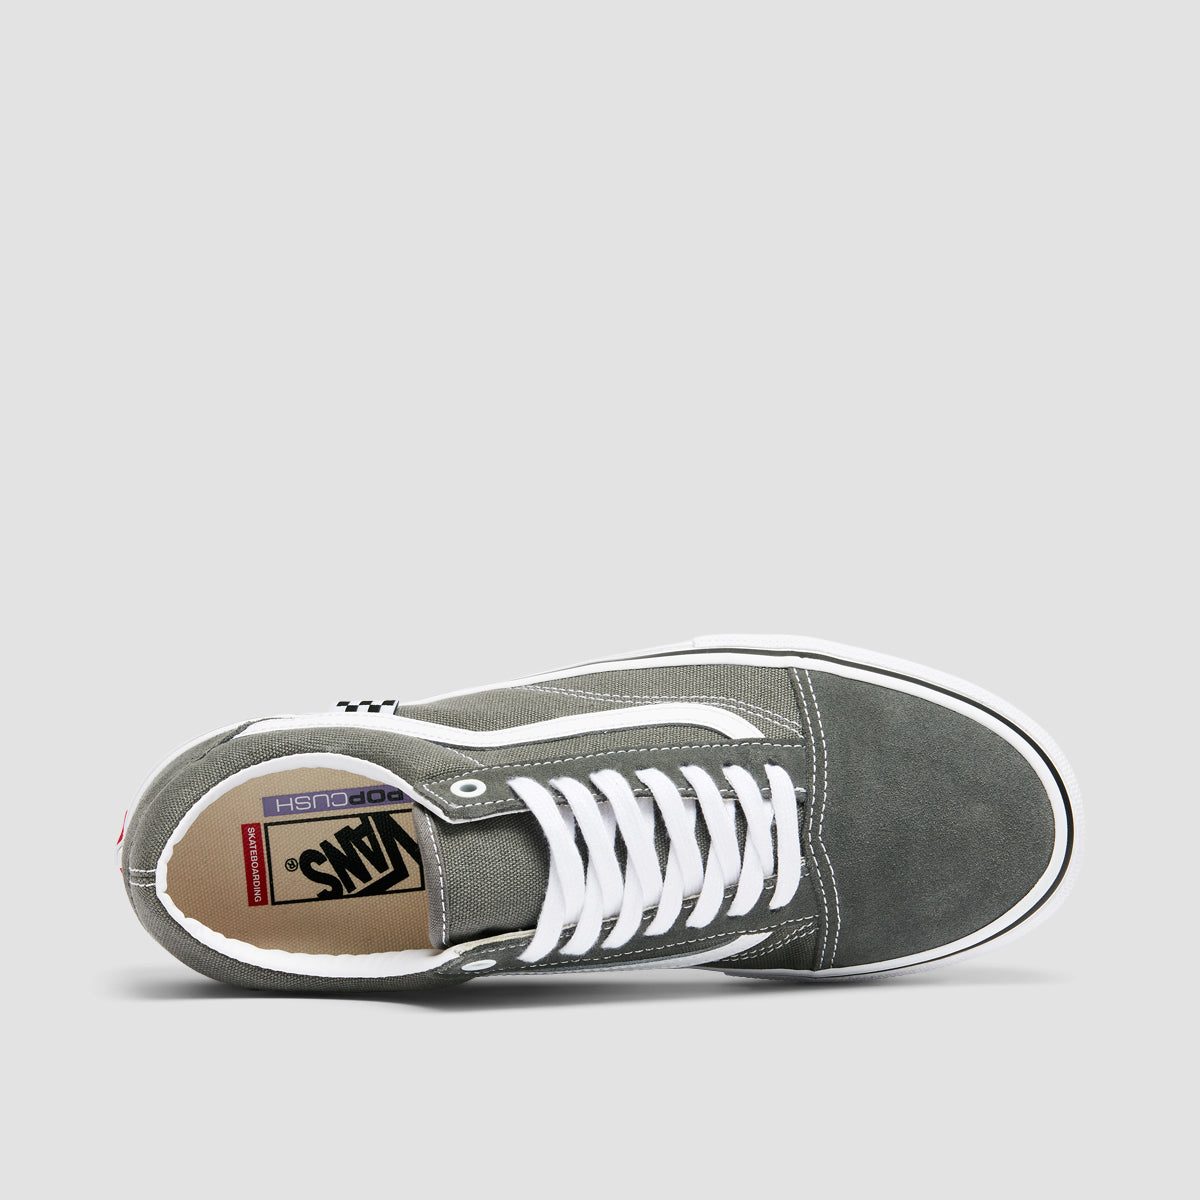 Vans Skate Old Skool Shoes - Pewter/White